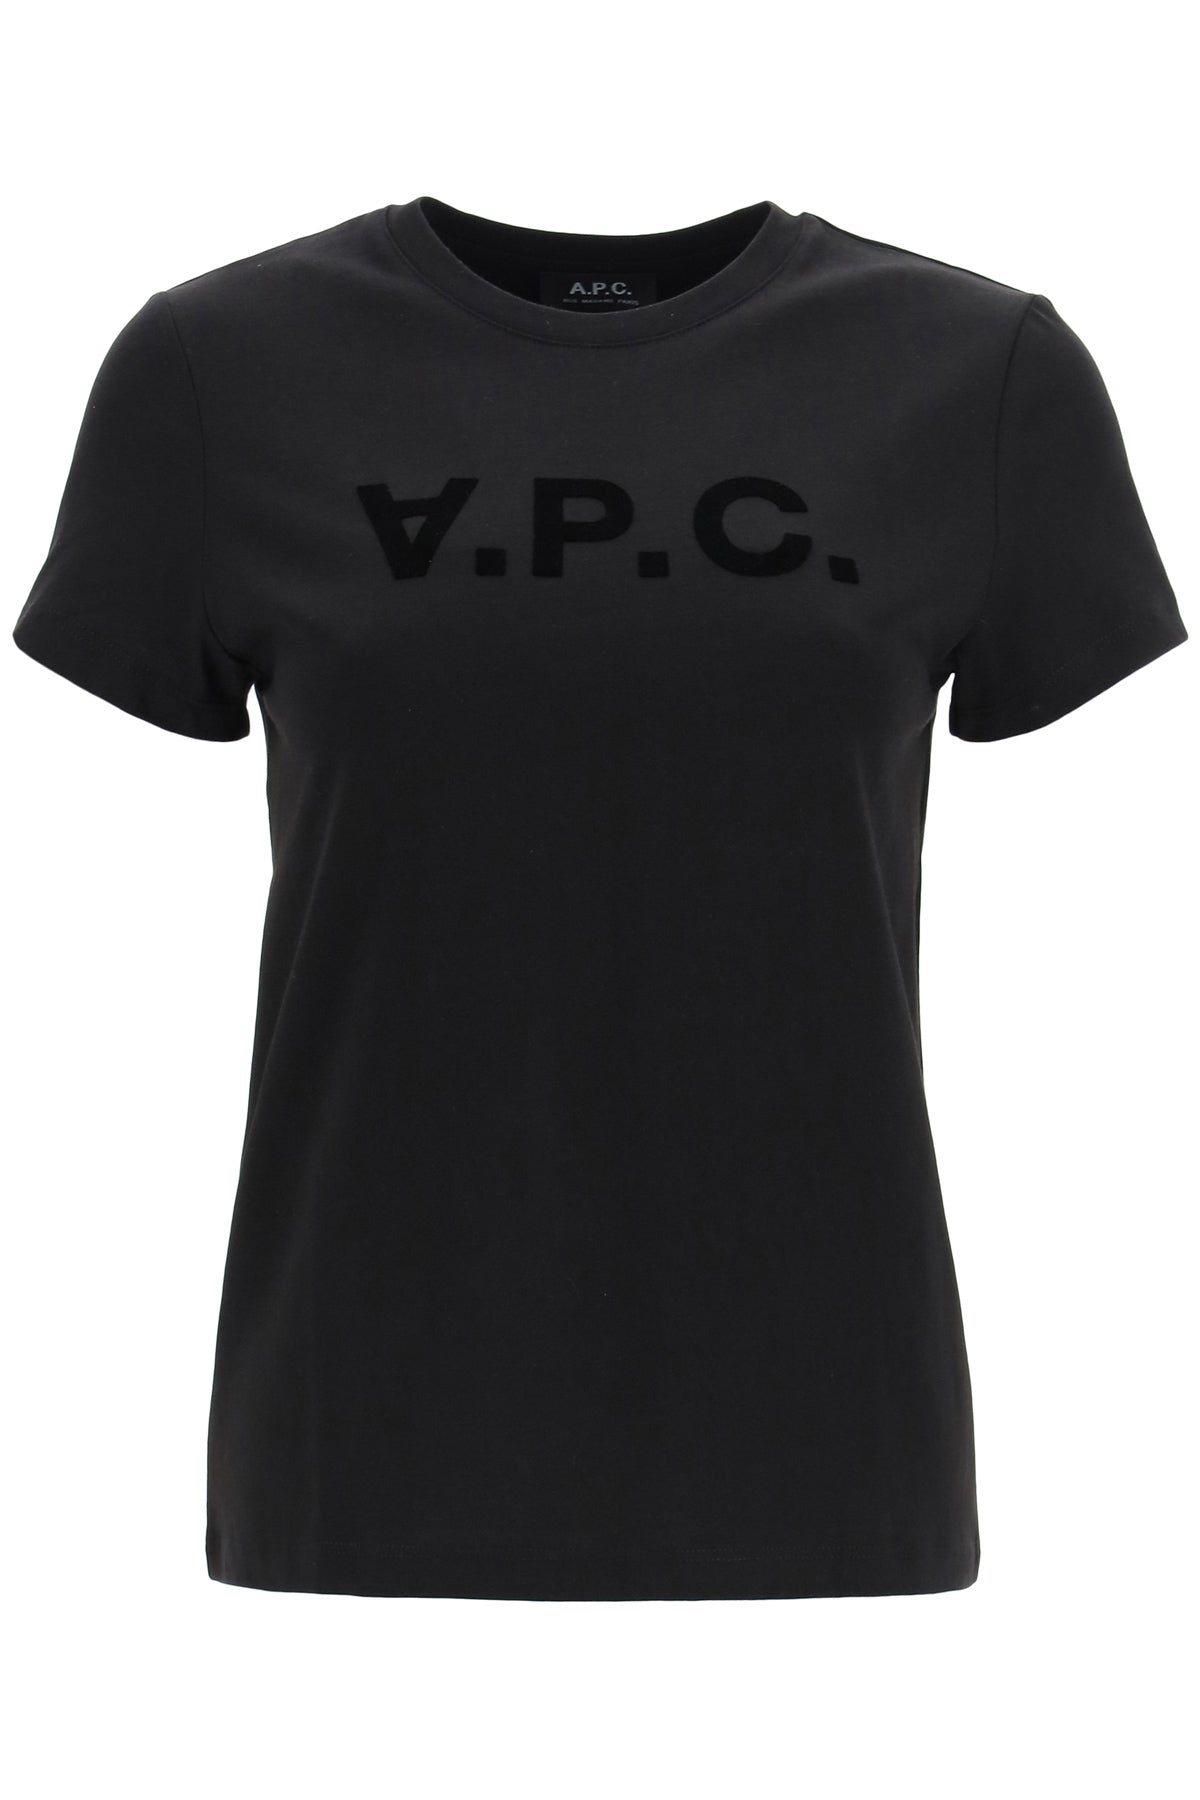 A.P.C-T Shirt Logo Vpc-Donna